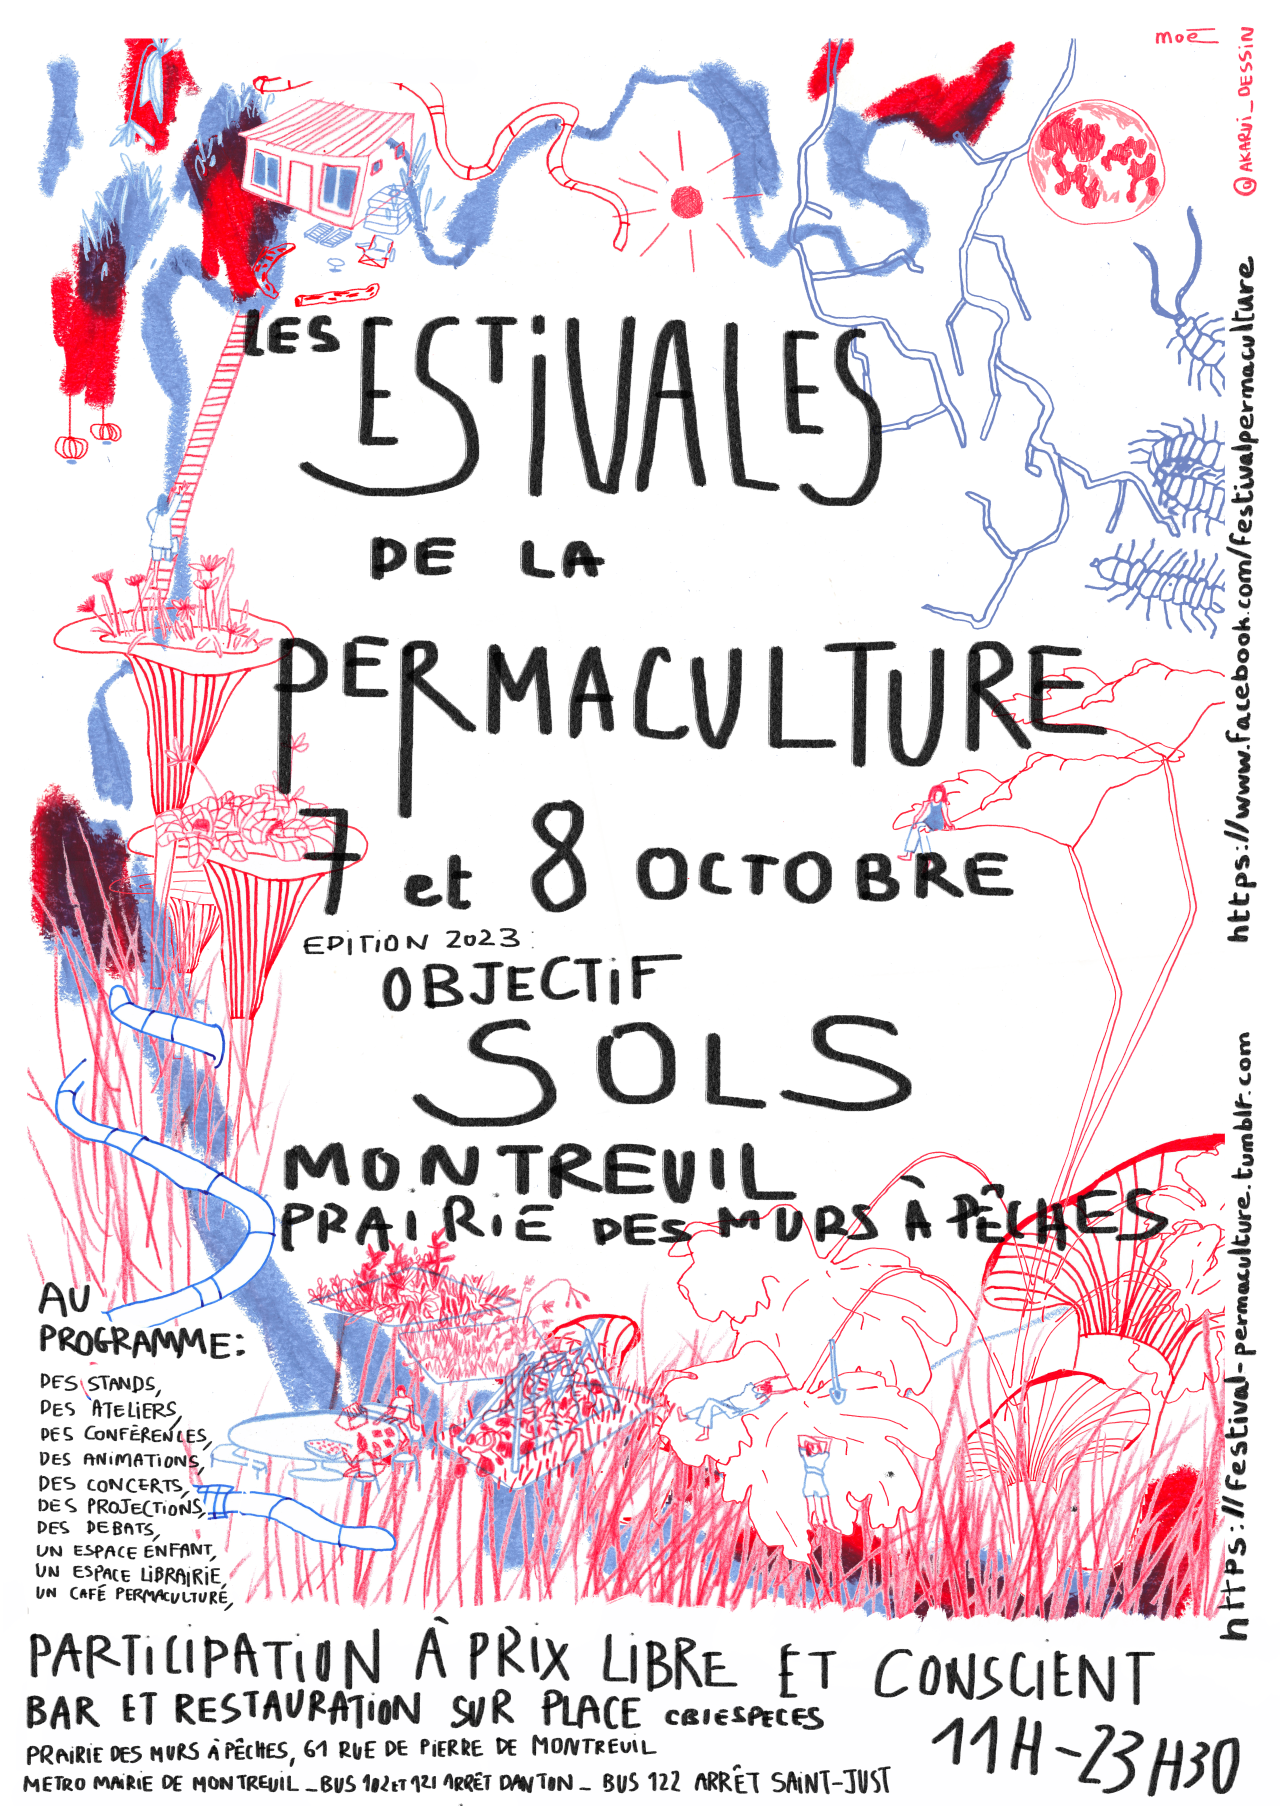 2023-10-07-Estivales-de-la-permaculture